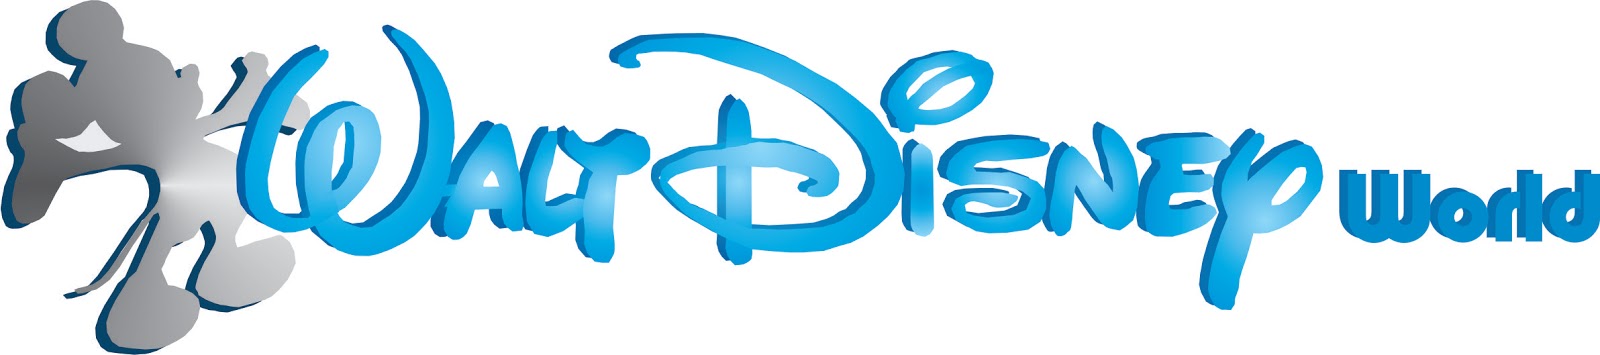 disney world logo clip art free - photo #18